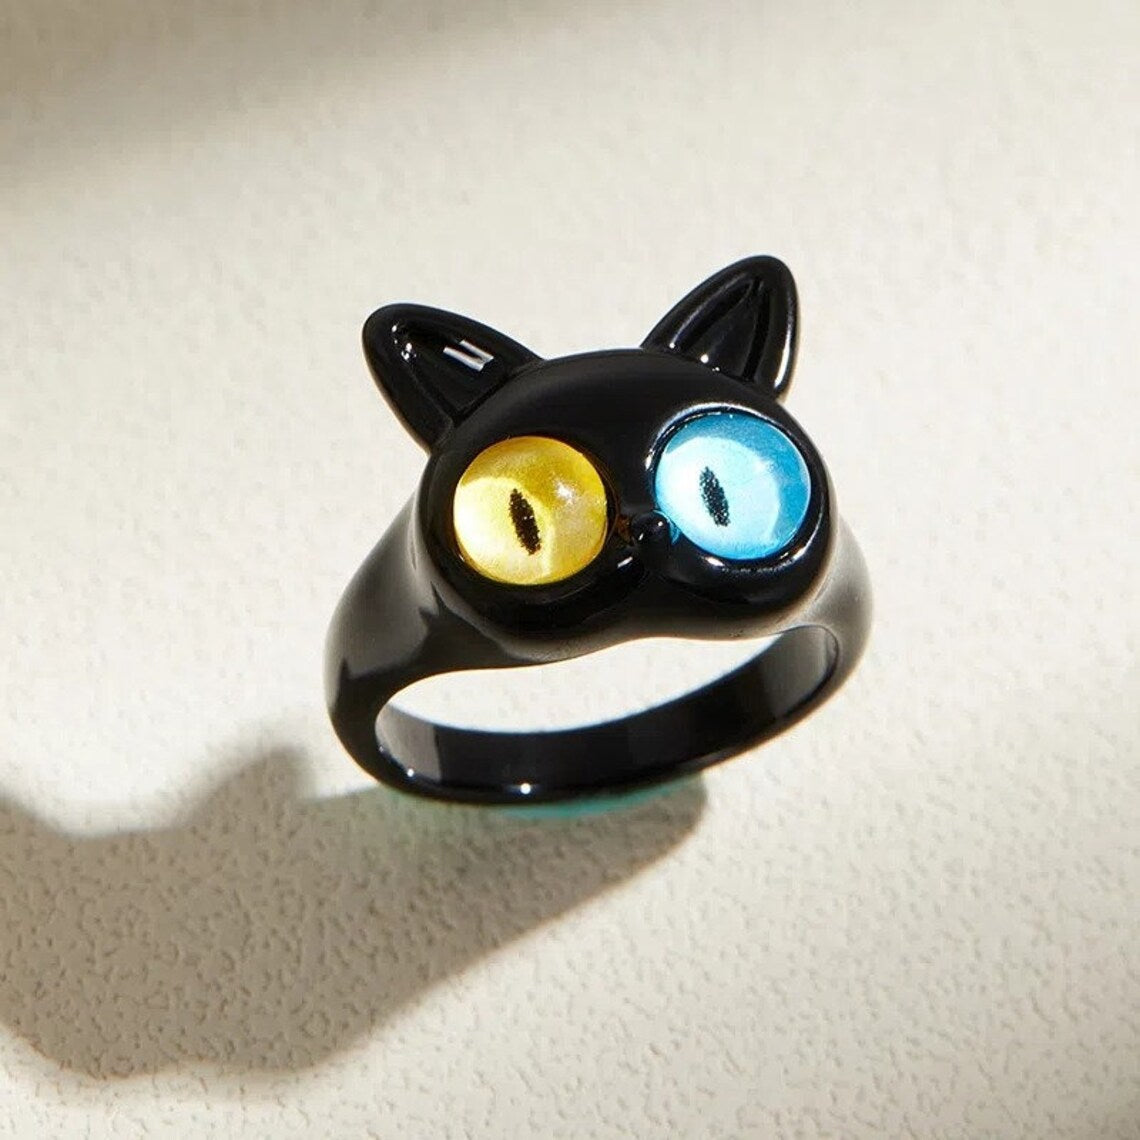 Cute Cat Eye Ring, Green Monster Ring, Adjustable Ring Band, Kawaii Design Jewelry